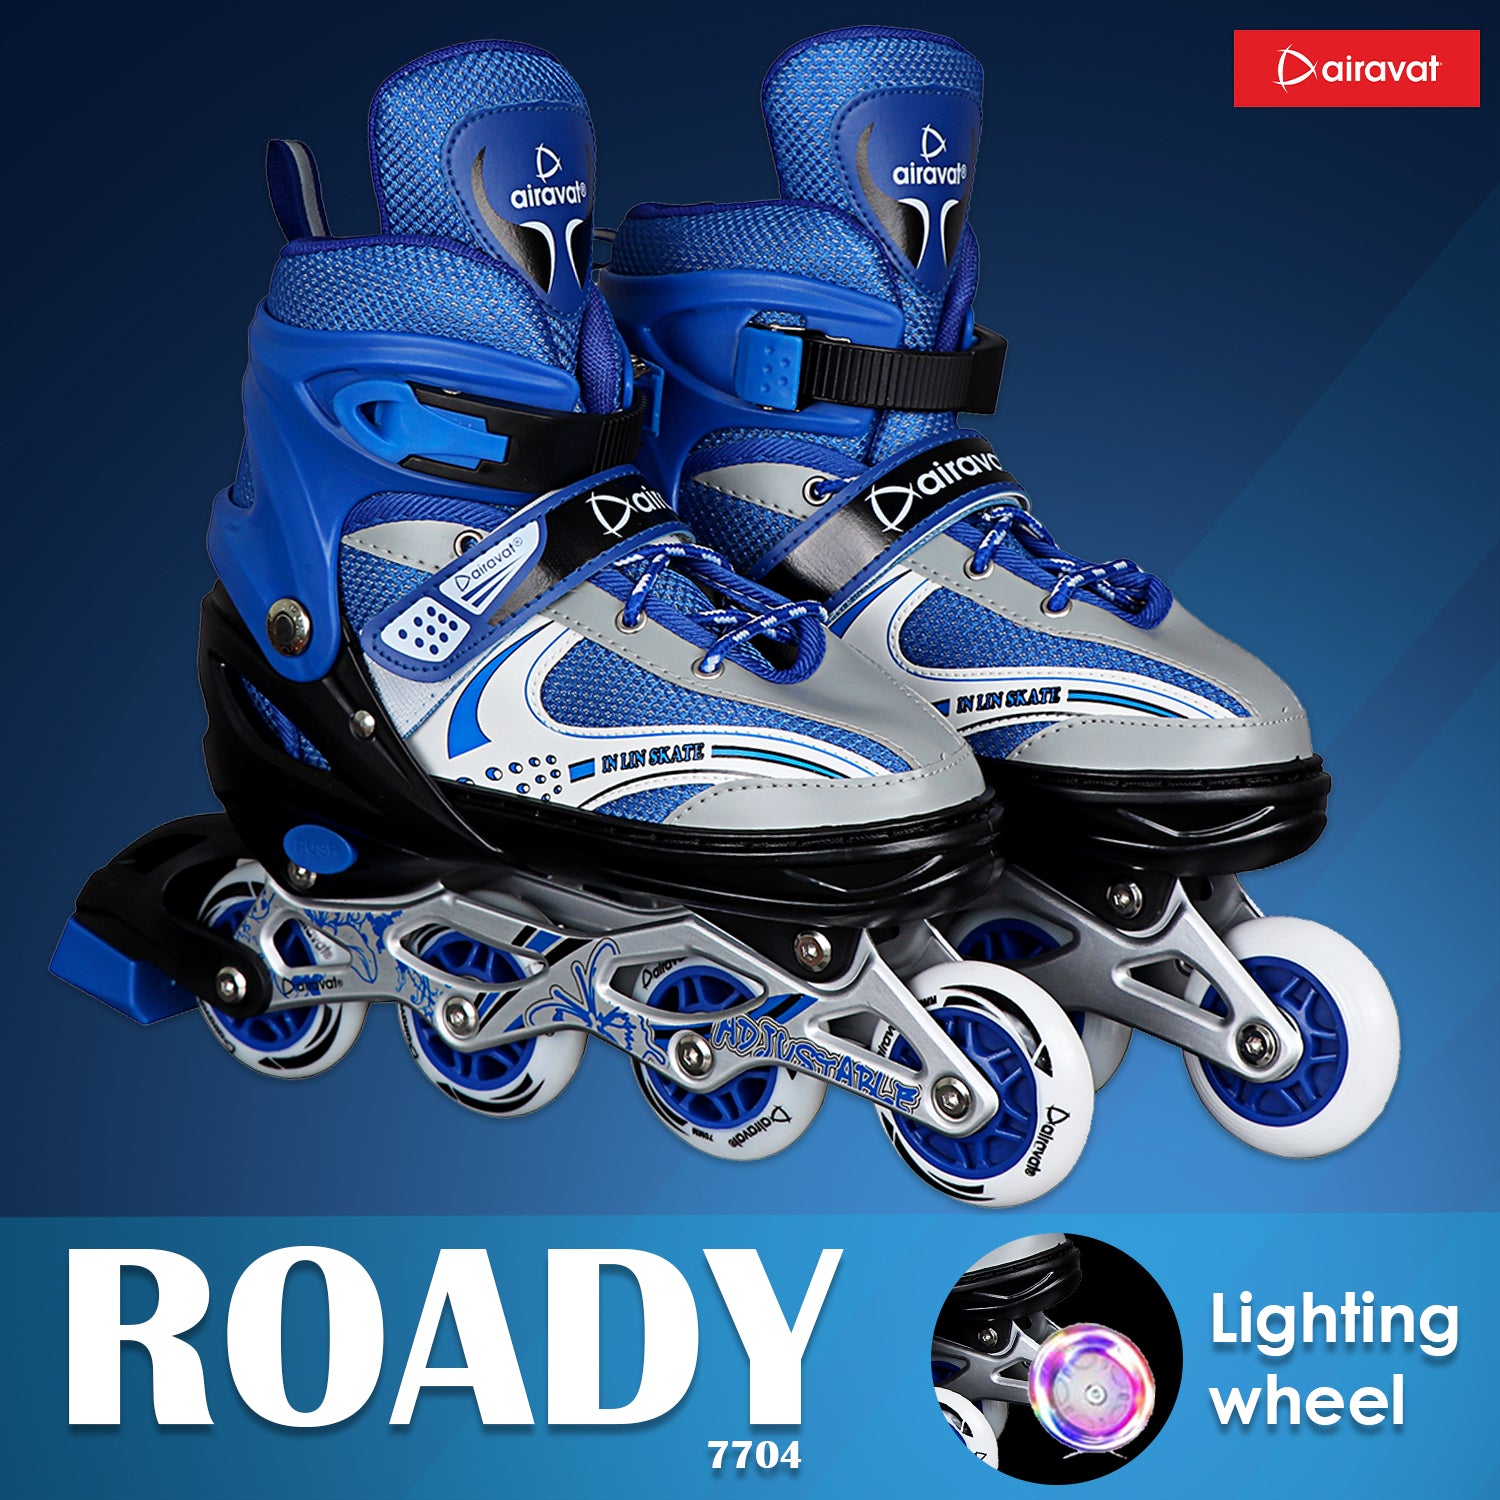 inline-skate-7704-roady-image-blue